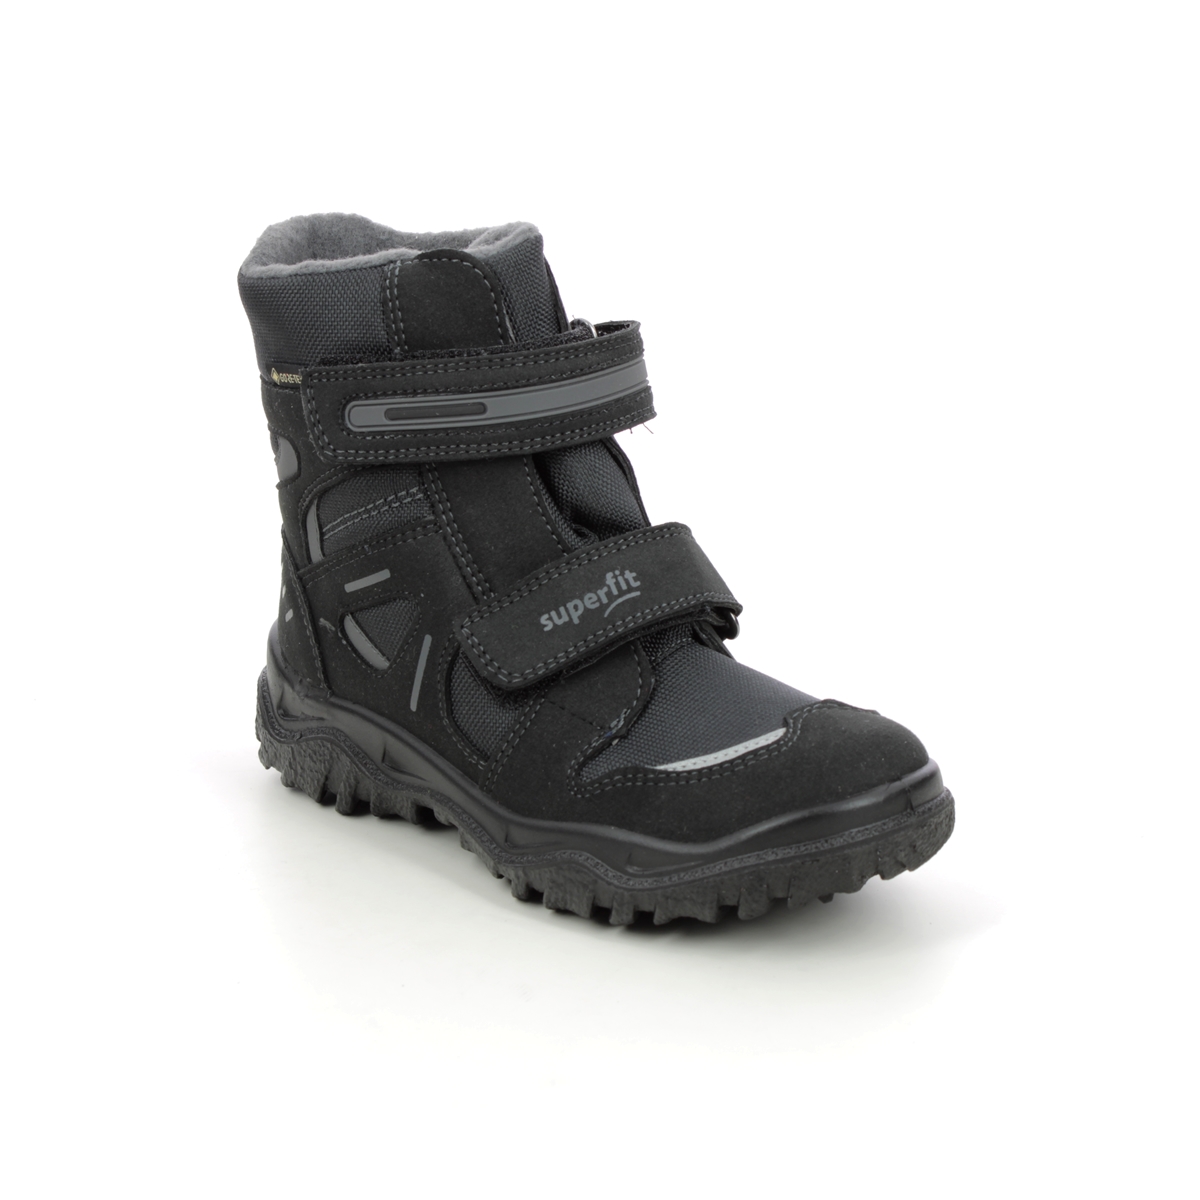 Superfit Husky Jnr Gore Black Kids Boys Boots 0809080-0600 In Size 35 In Plain Black For kids